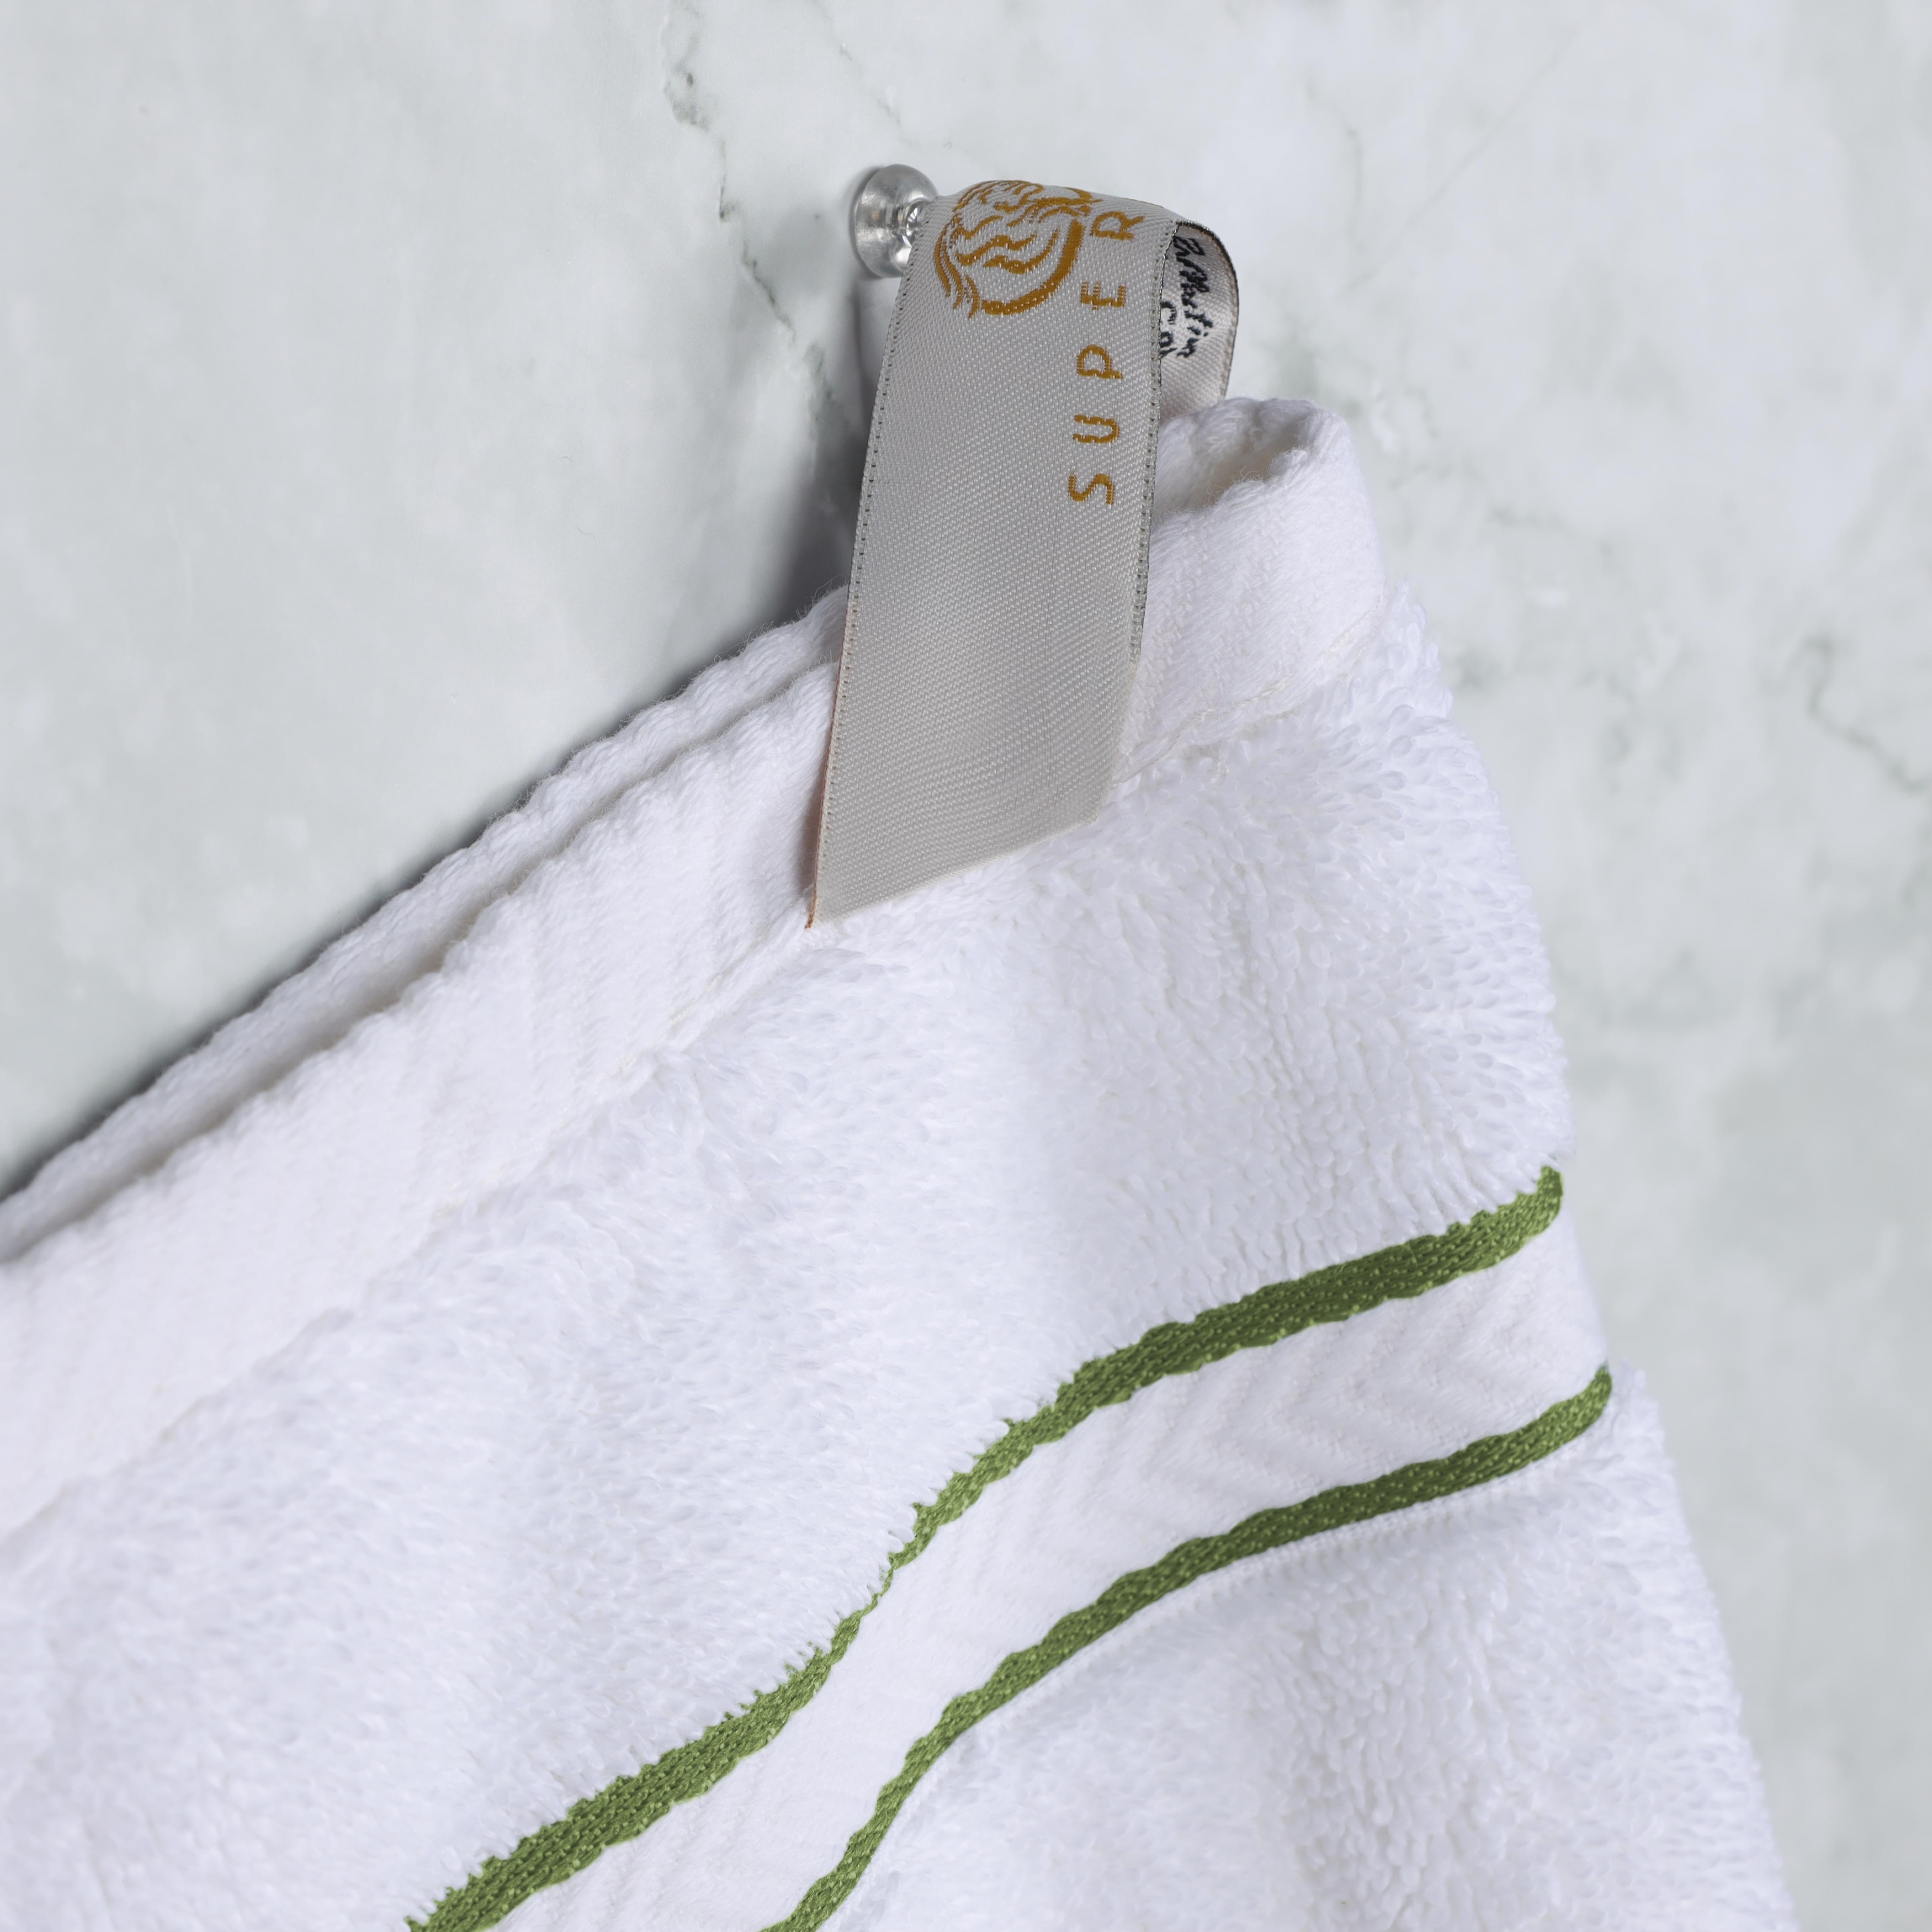 Turkish SPA Collection 6-Piece Towel Set - Bed Bath & Beyond - 8522505